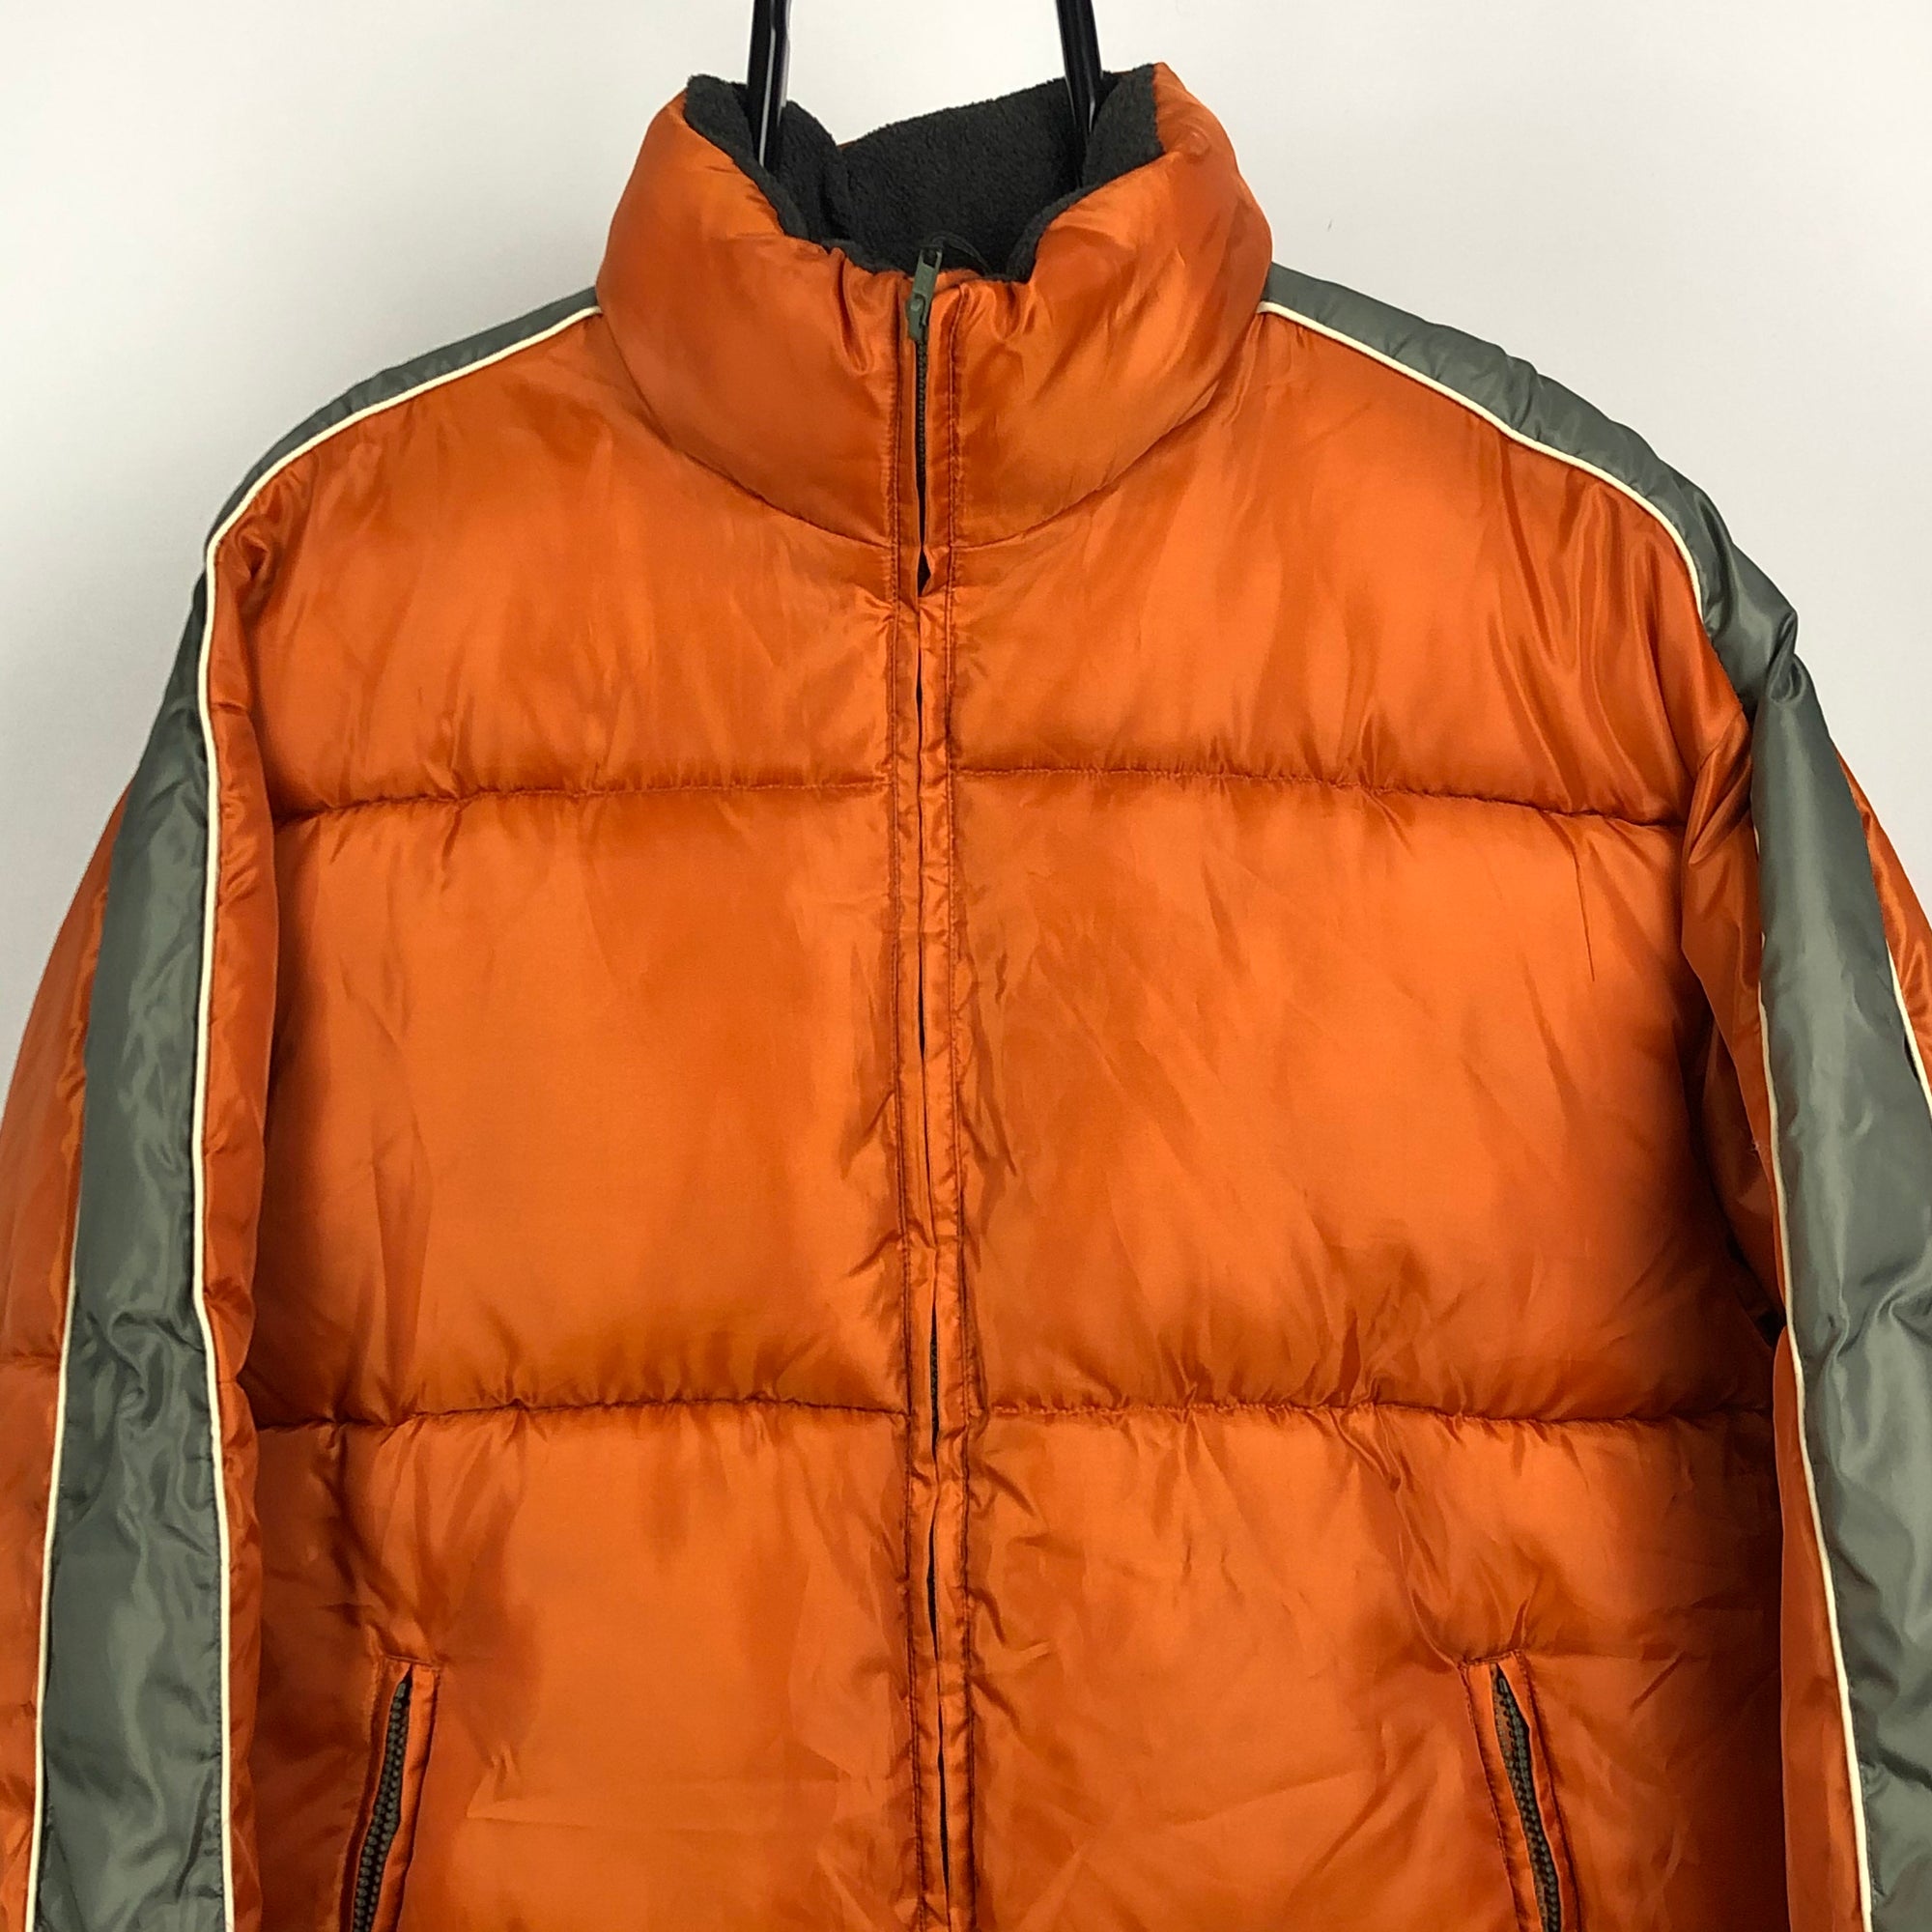 Vintage Orange+Silver/Grey Puffer Jacket - Men's Large/Women's XL